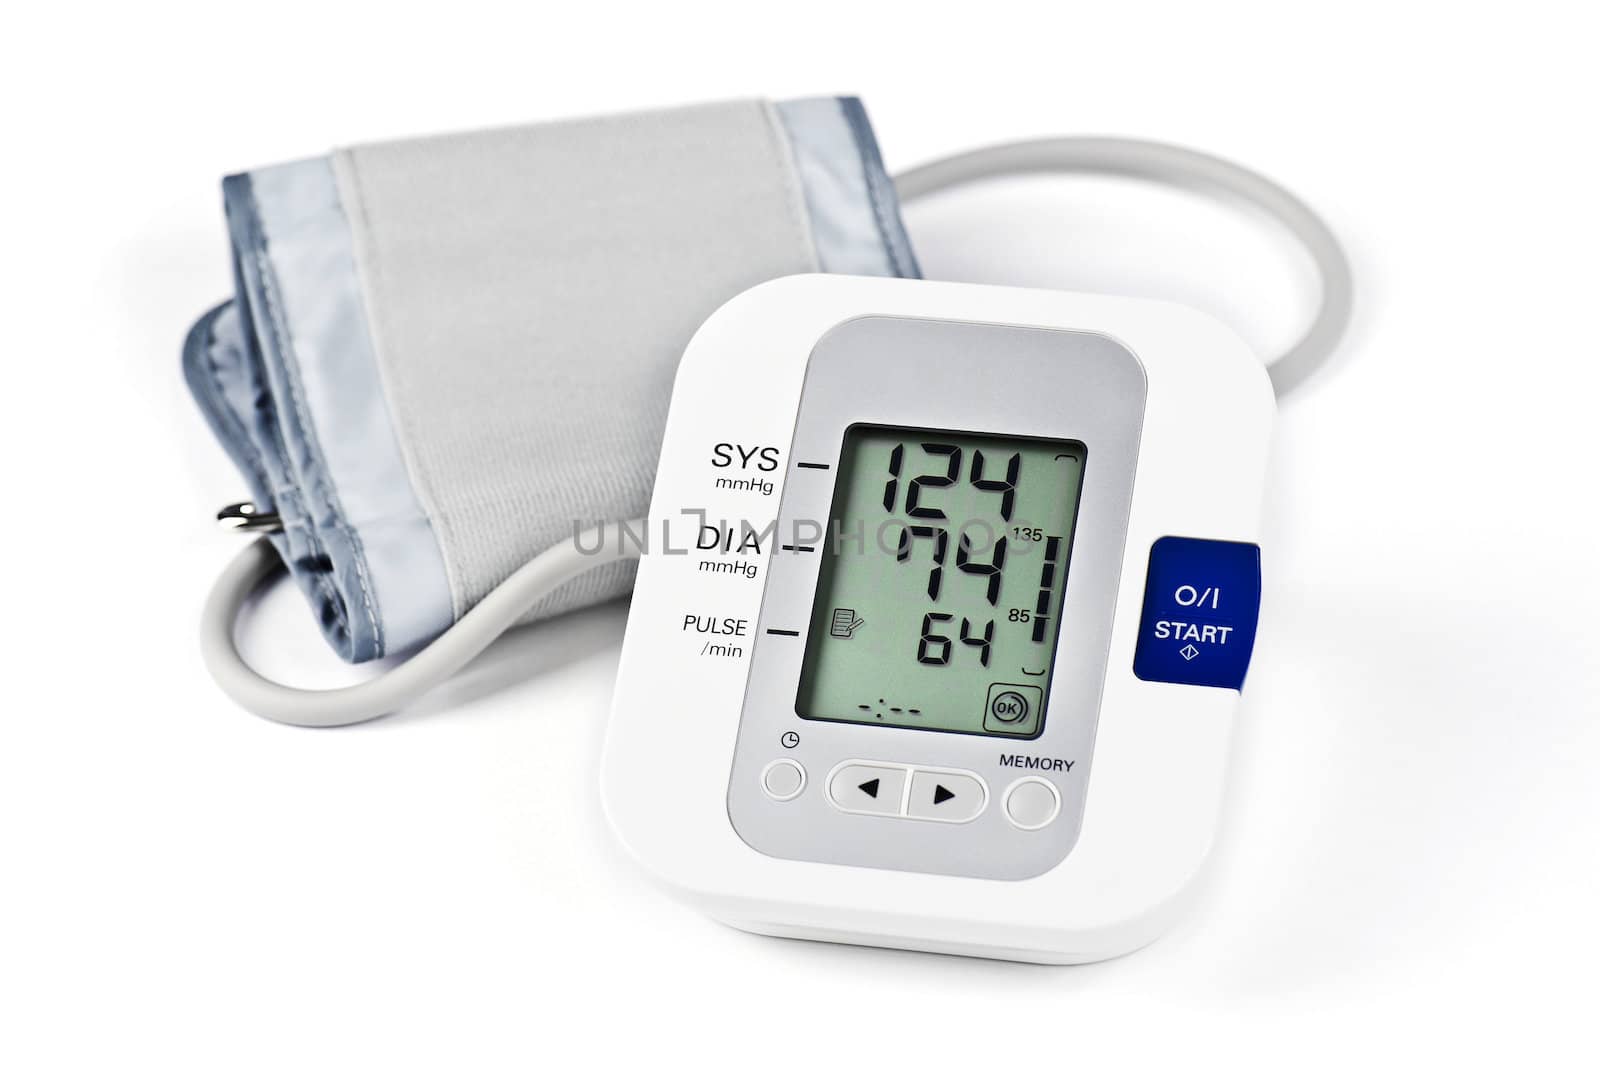 Digital Blood Pressure Monitor on white background